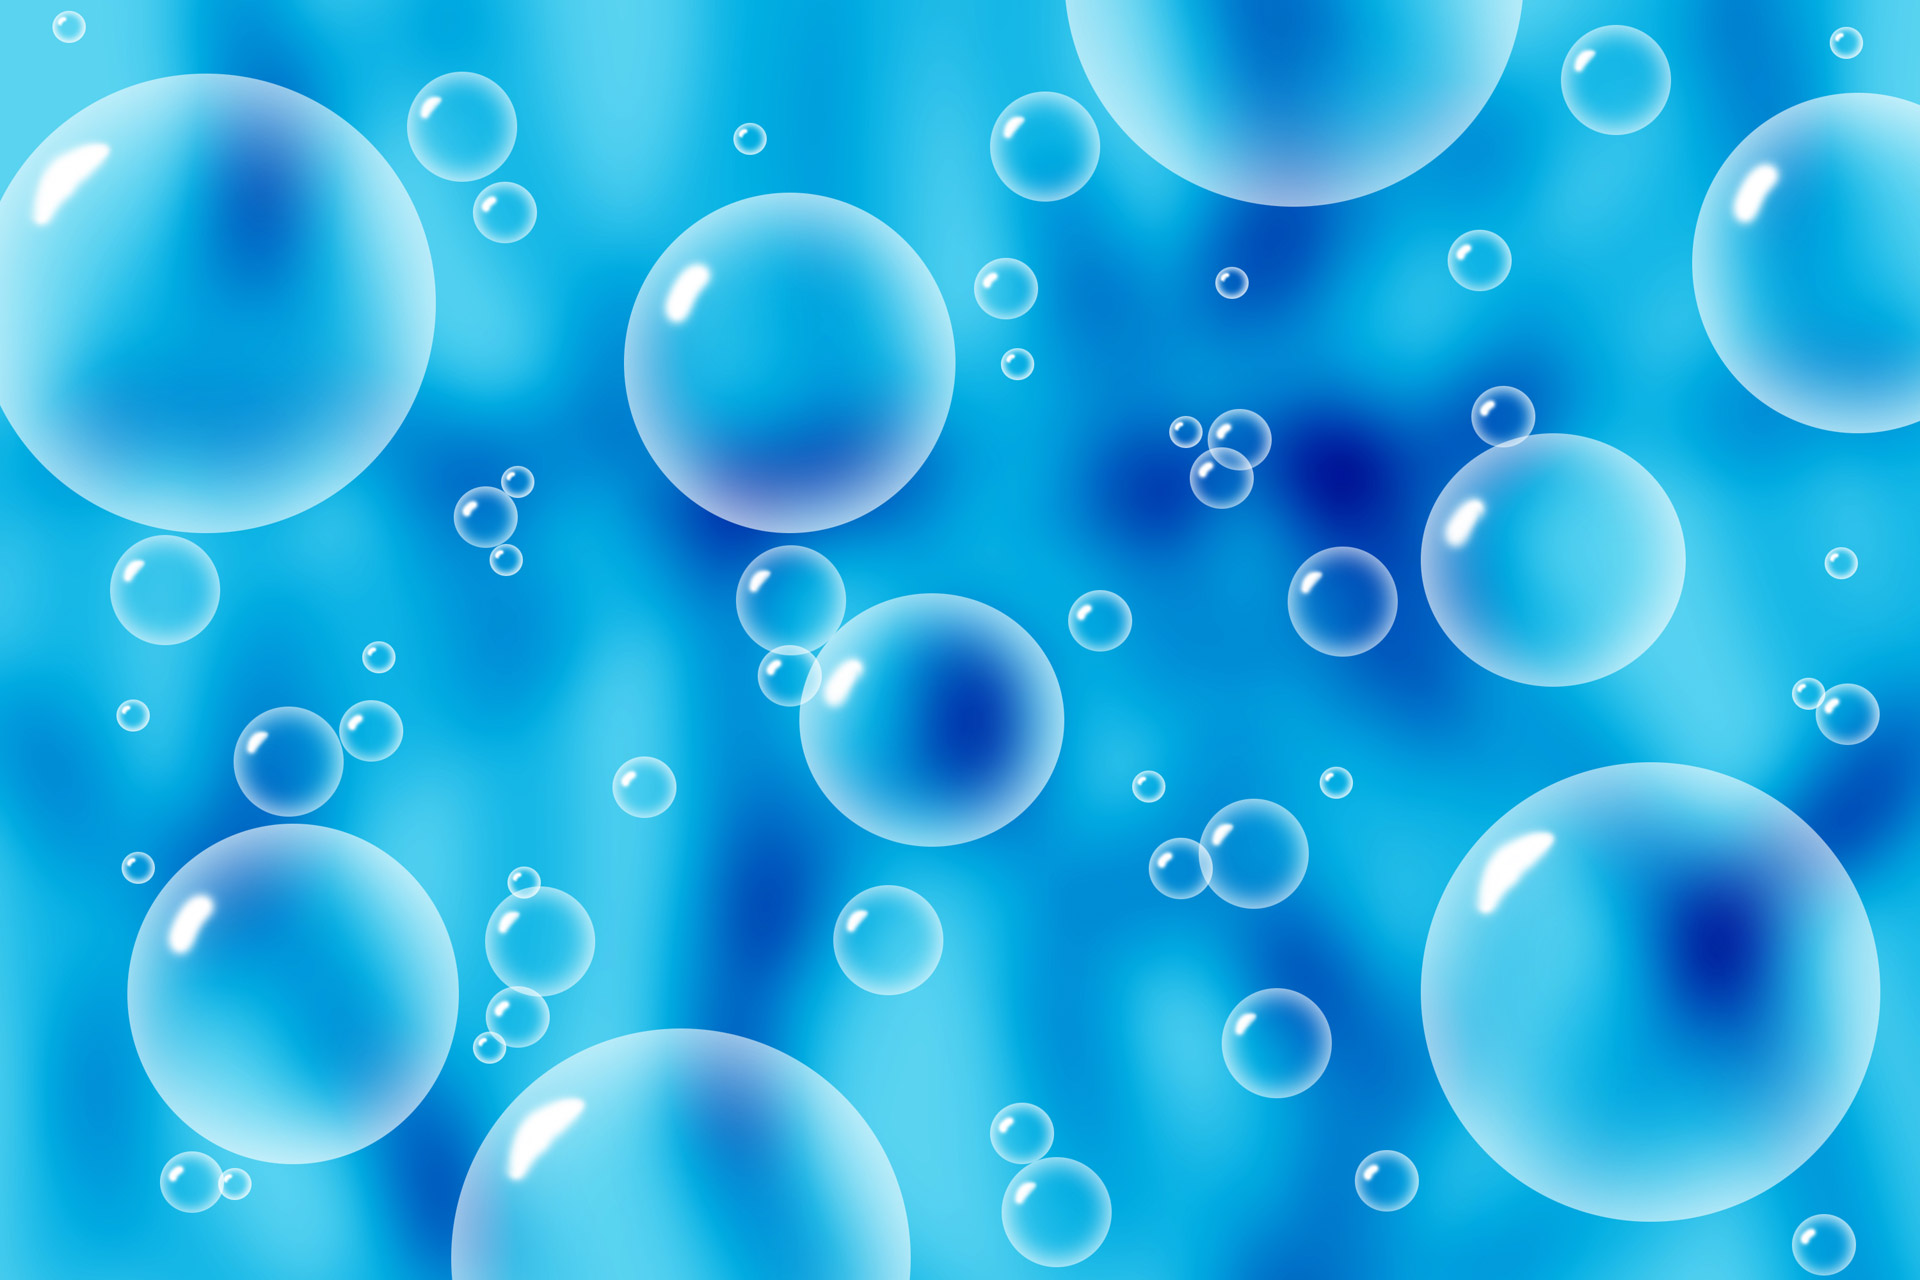 Background clipart bubble. Bubbles on blue free